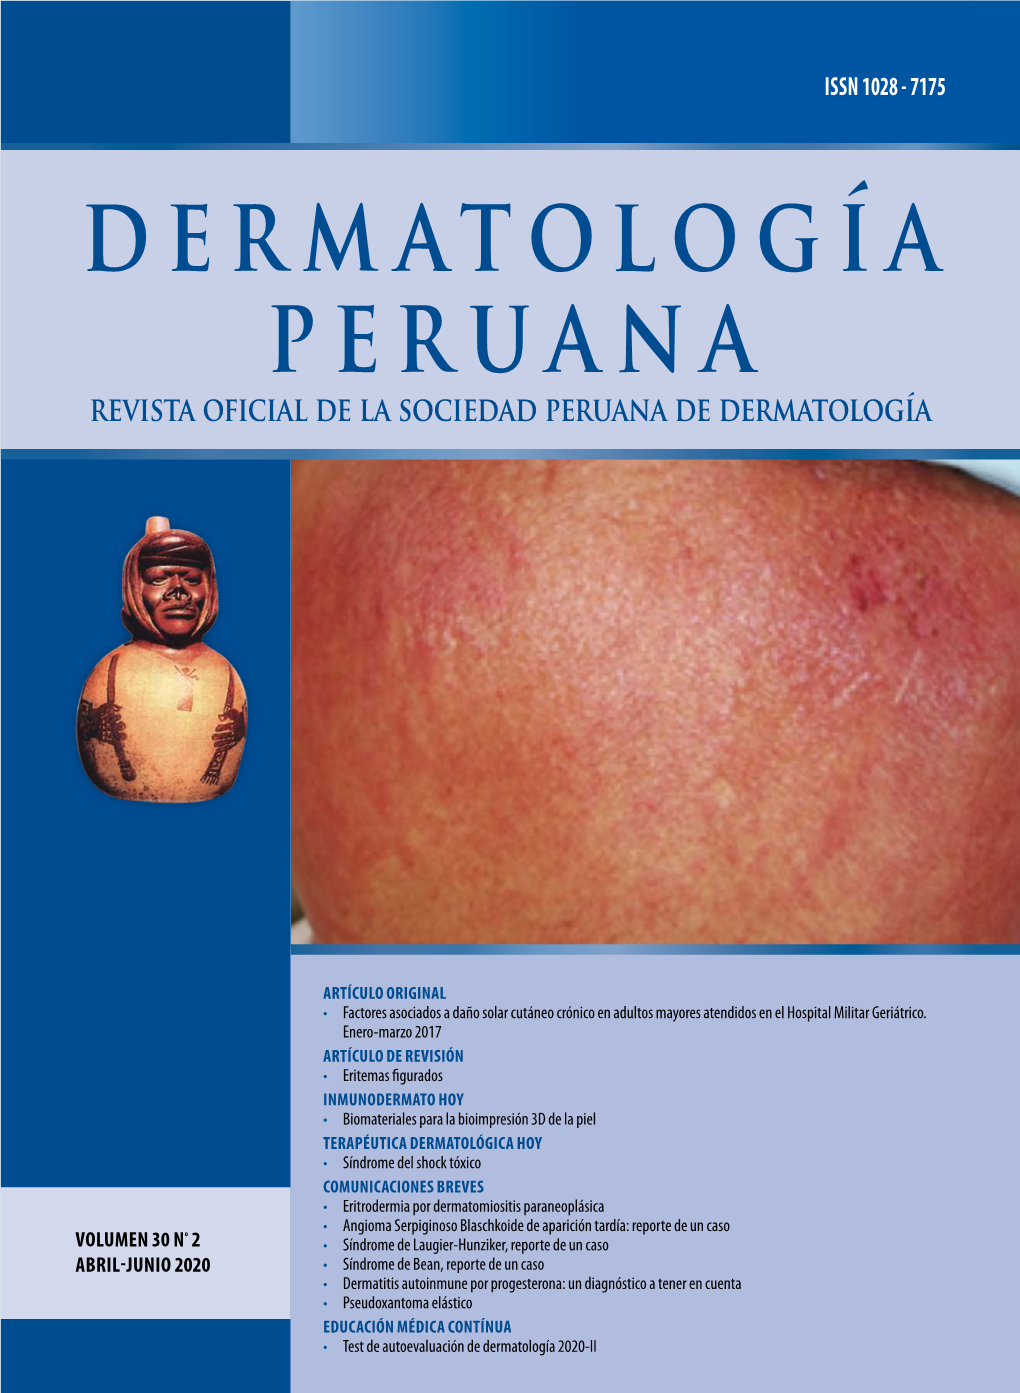 Eritrodermia Por Dermatomiositis Paraneoplásica